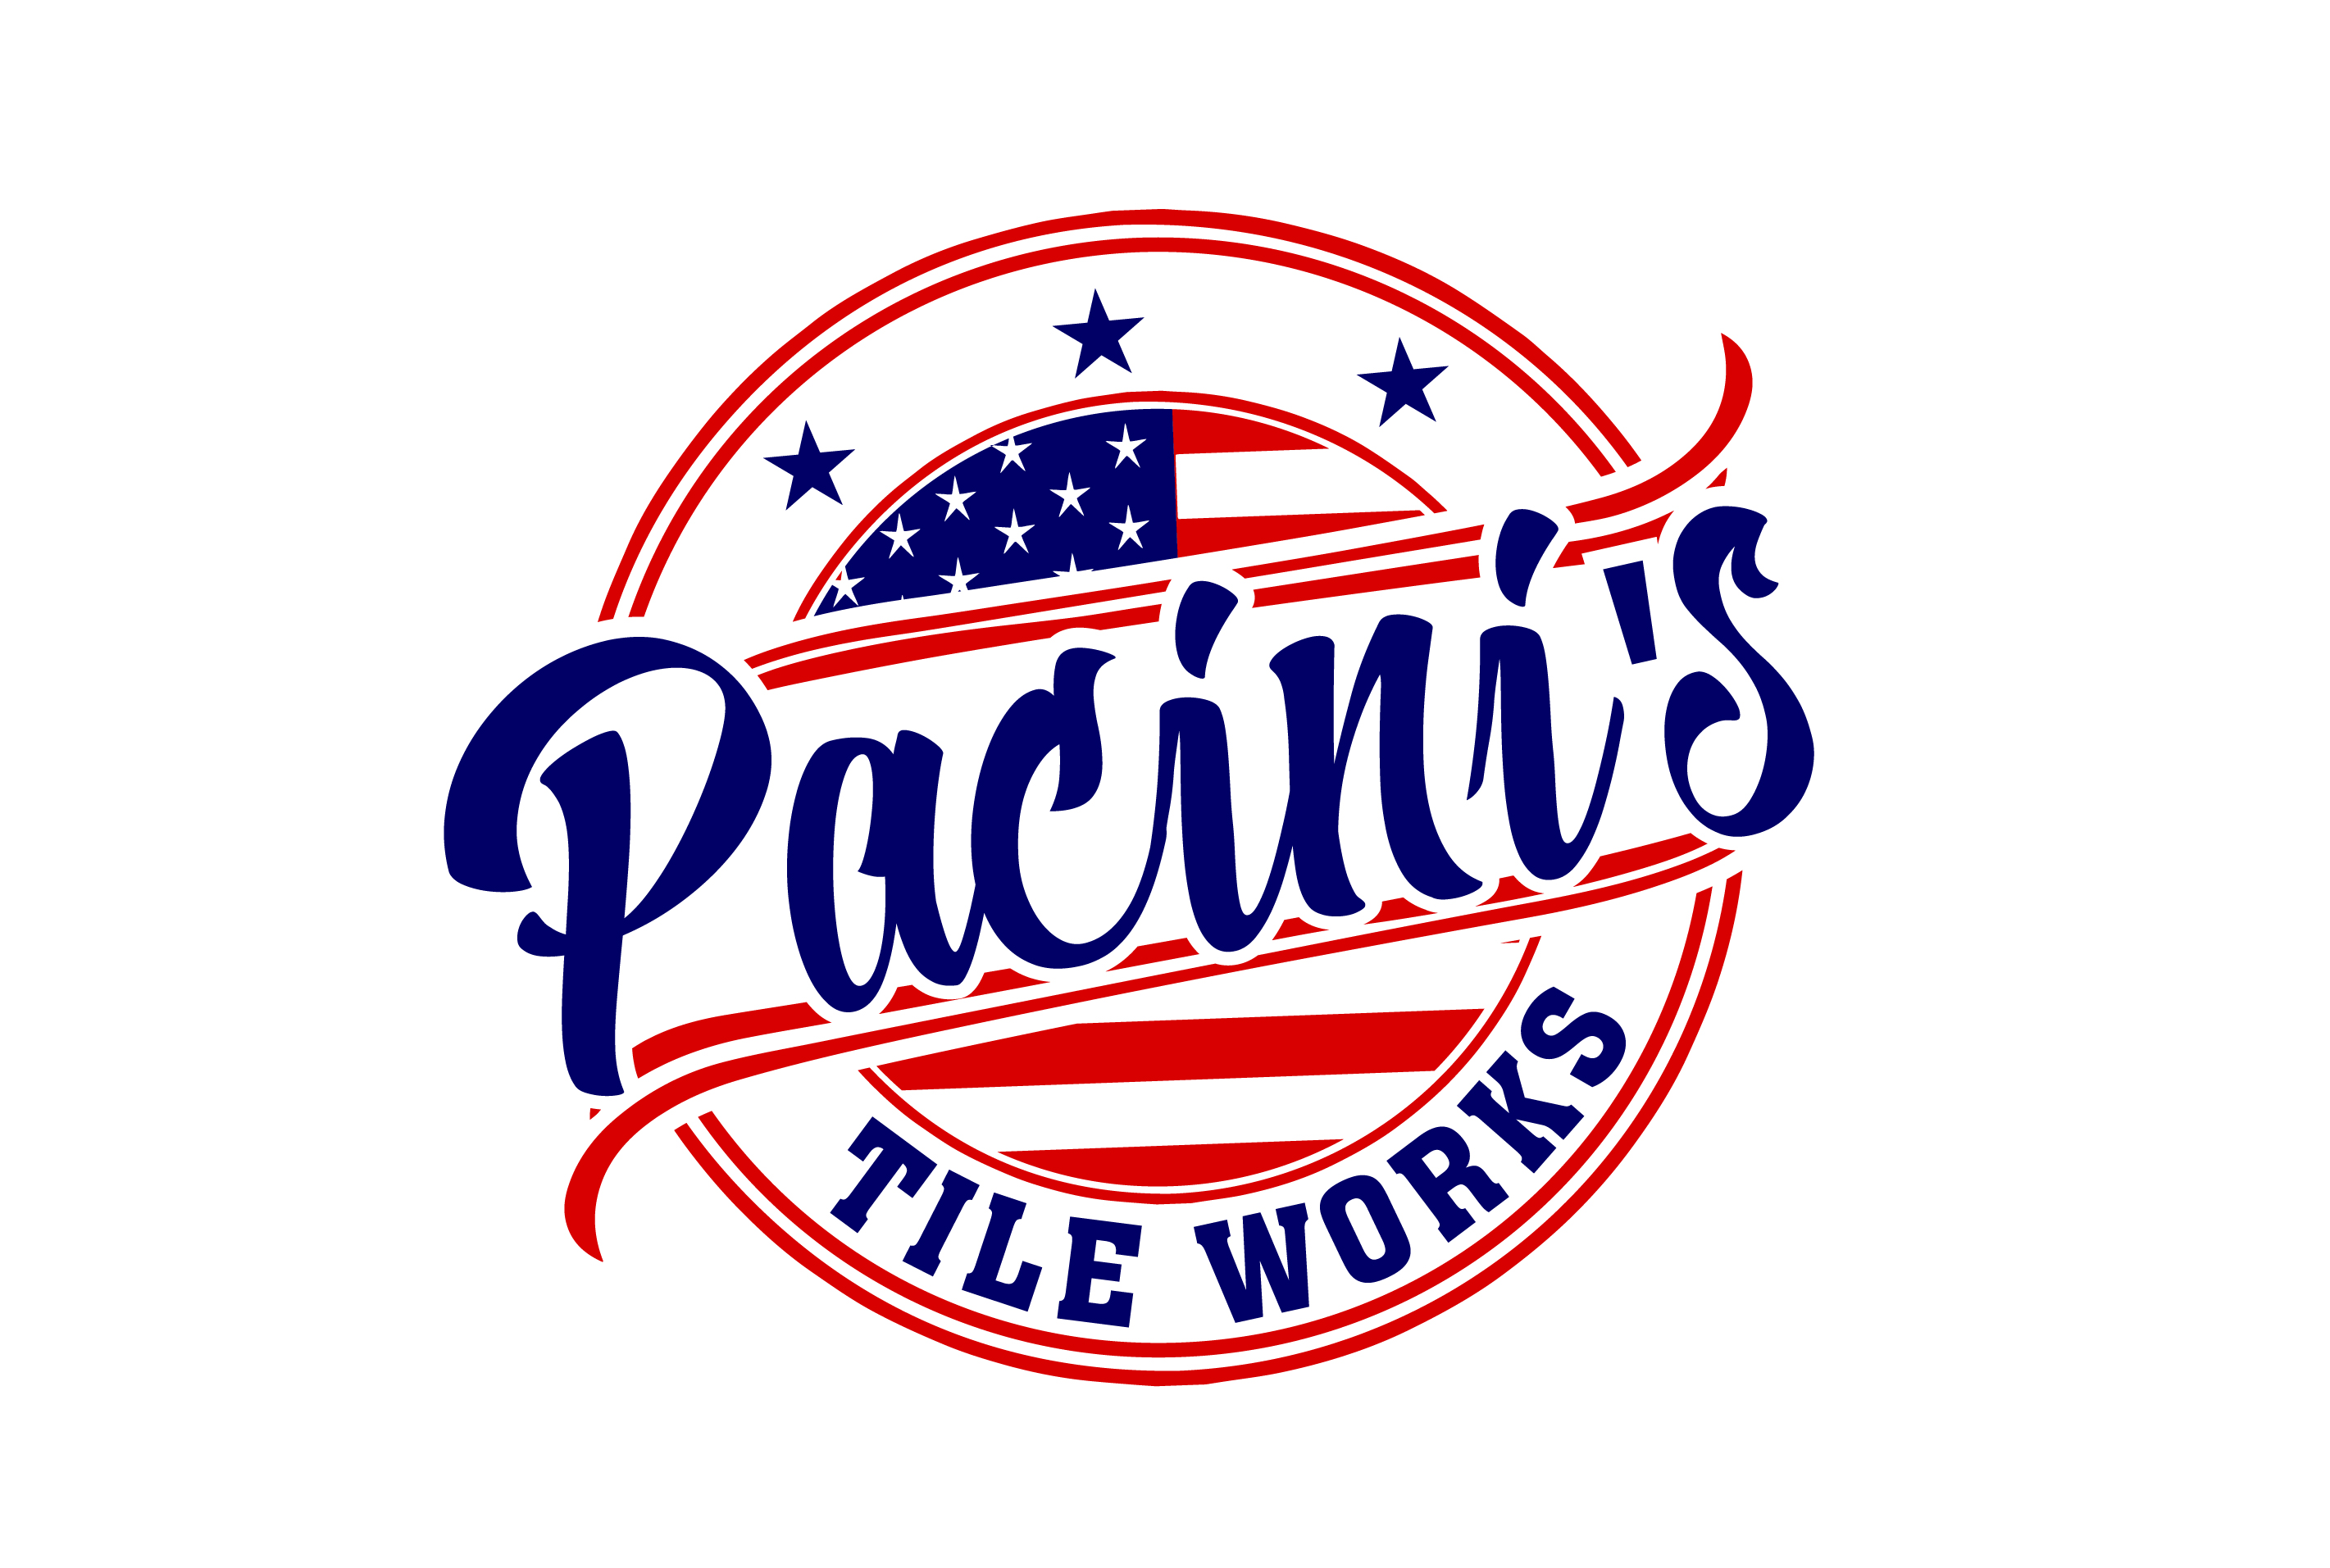 Pacini's Tile Works Logo